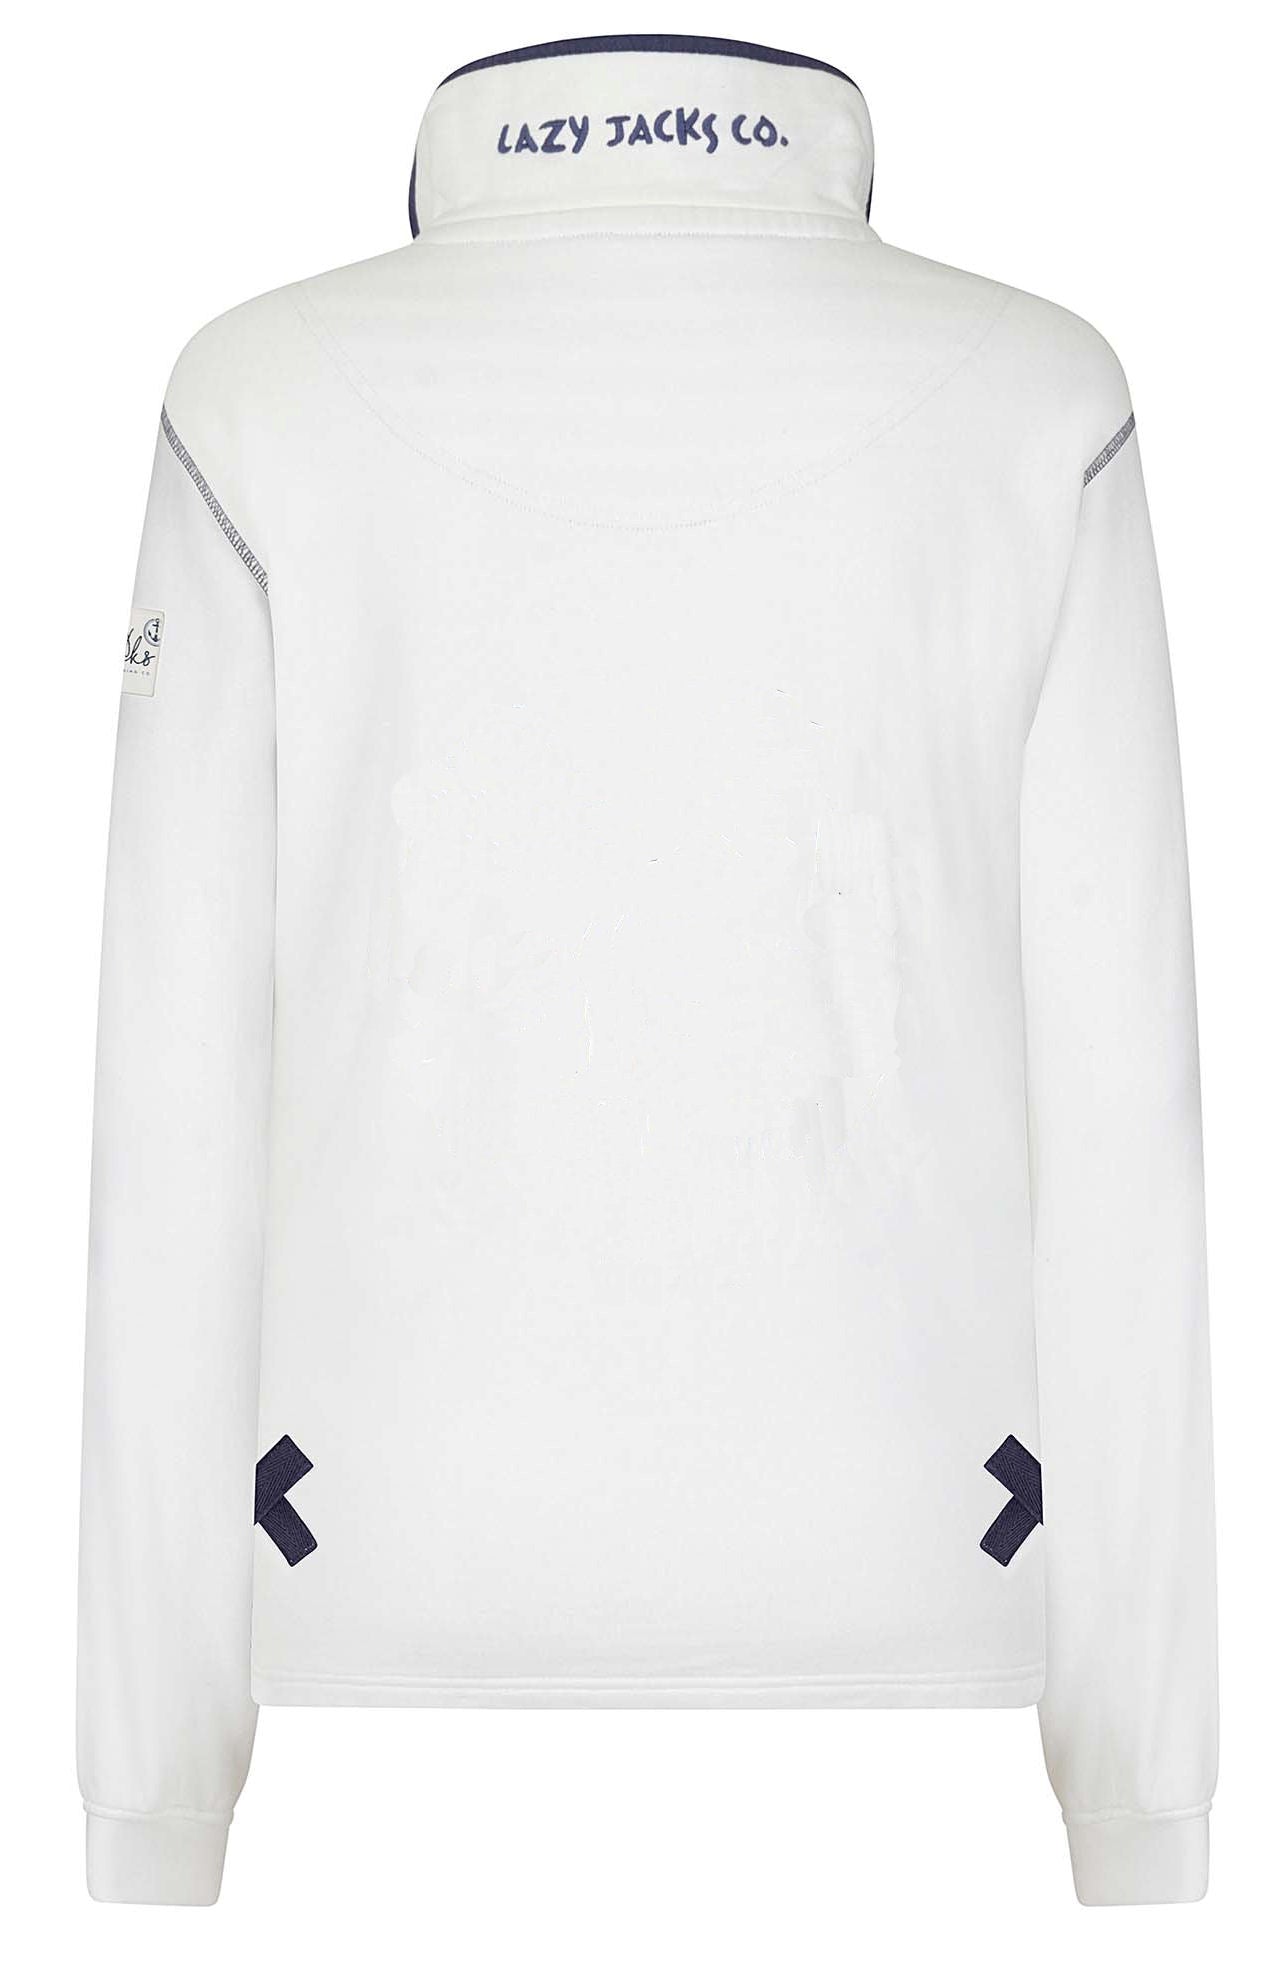 Women's Lazy Jacks LJ3 zip neck sweatshirt in White with embroidered logo collar.